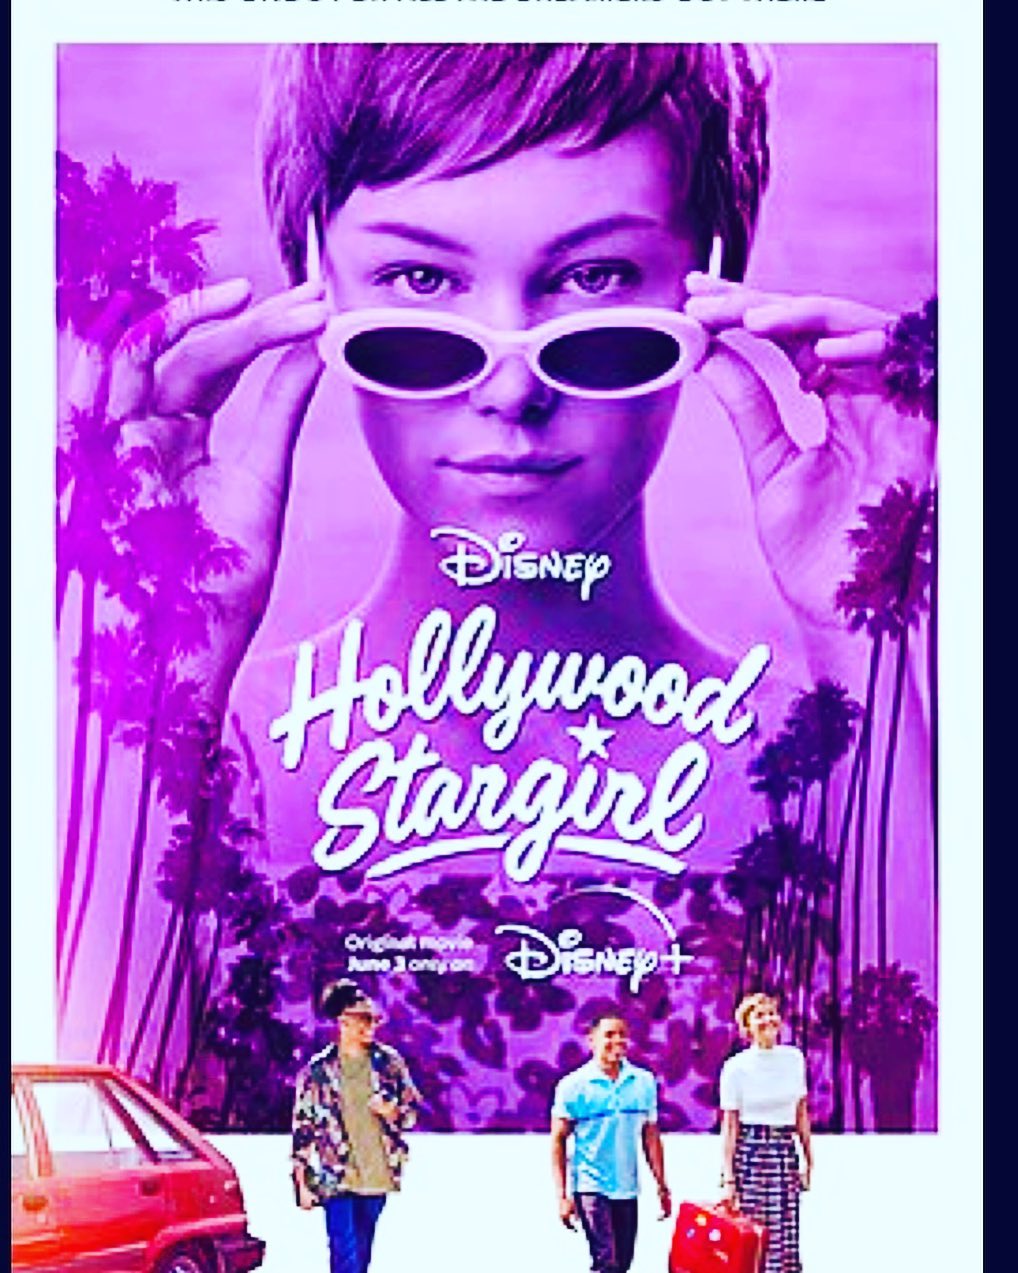 Just watched @stargirl and loved it!Thank you @gracevanderwaal @umathurman @missjudygreer for inspiring me on a Monday night!
-
-
-
#stargirl #hollywoodstargirl #disney